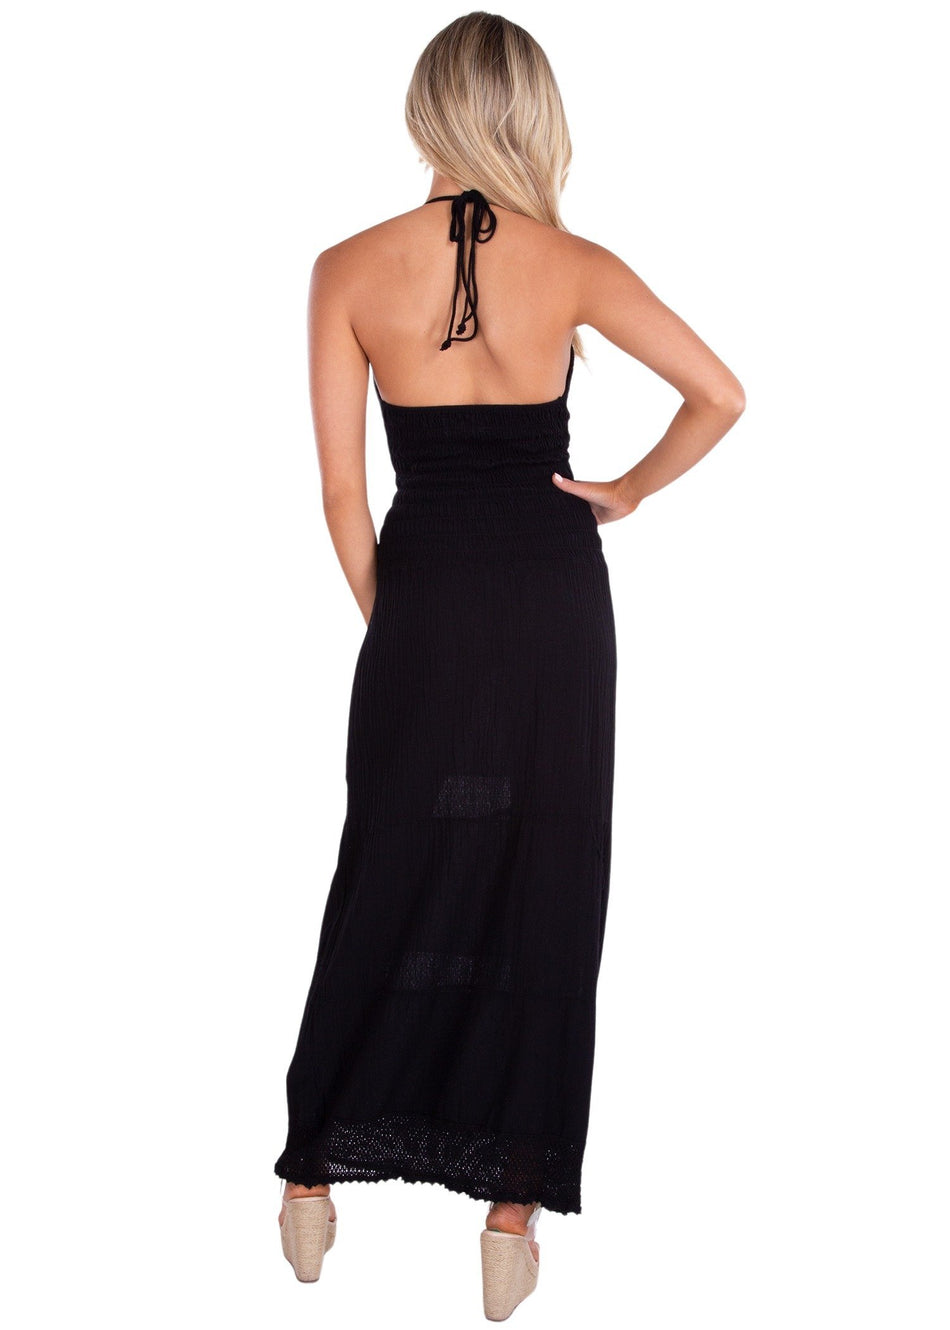 NW1223 - Black Cotton Dress